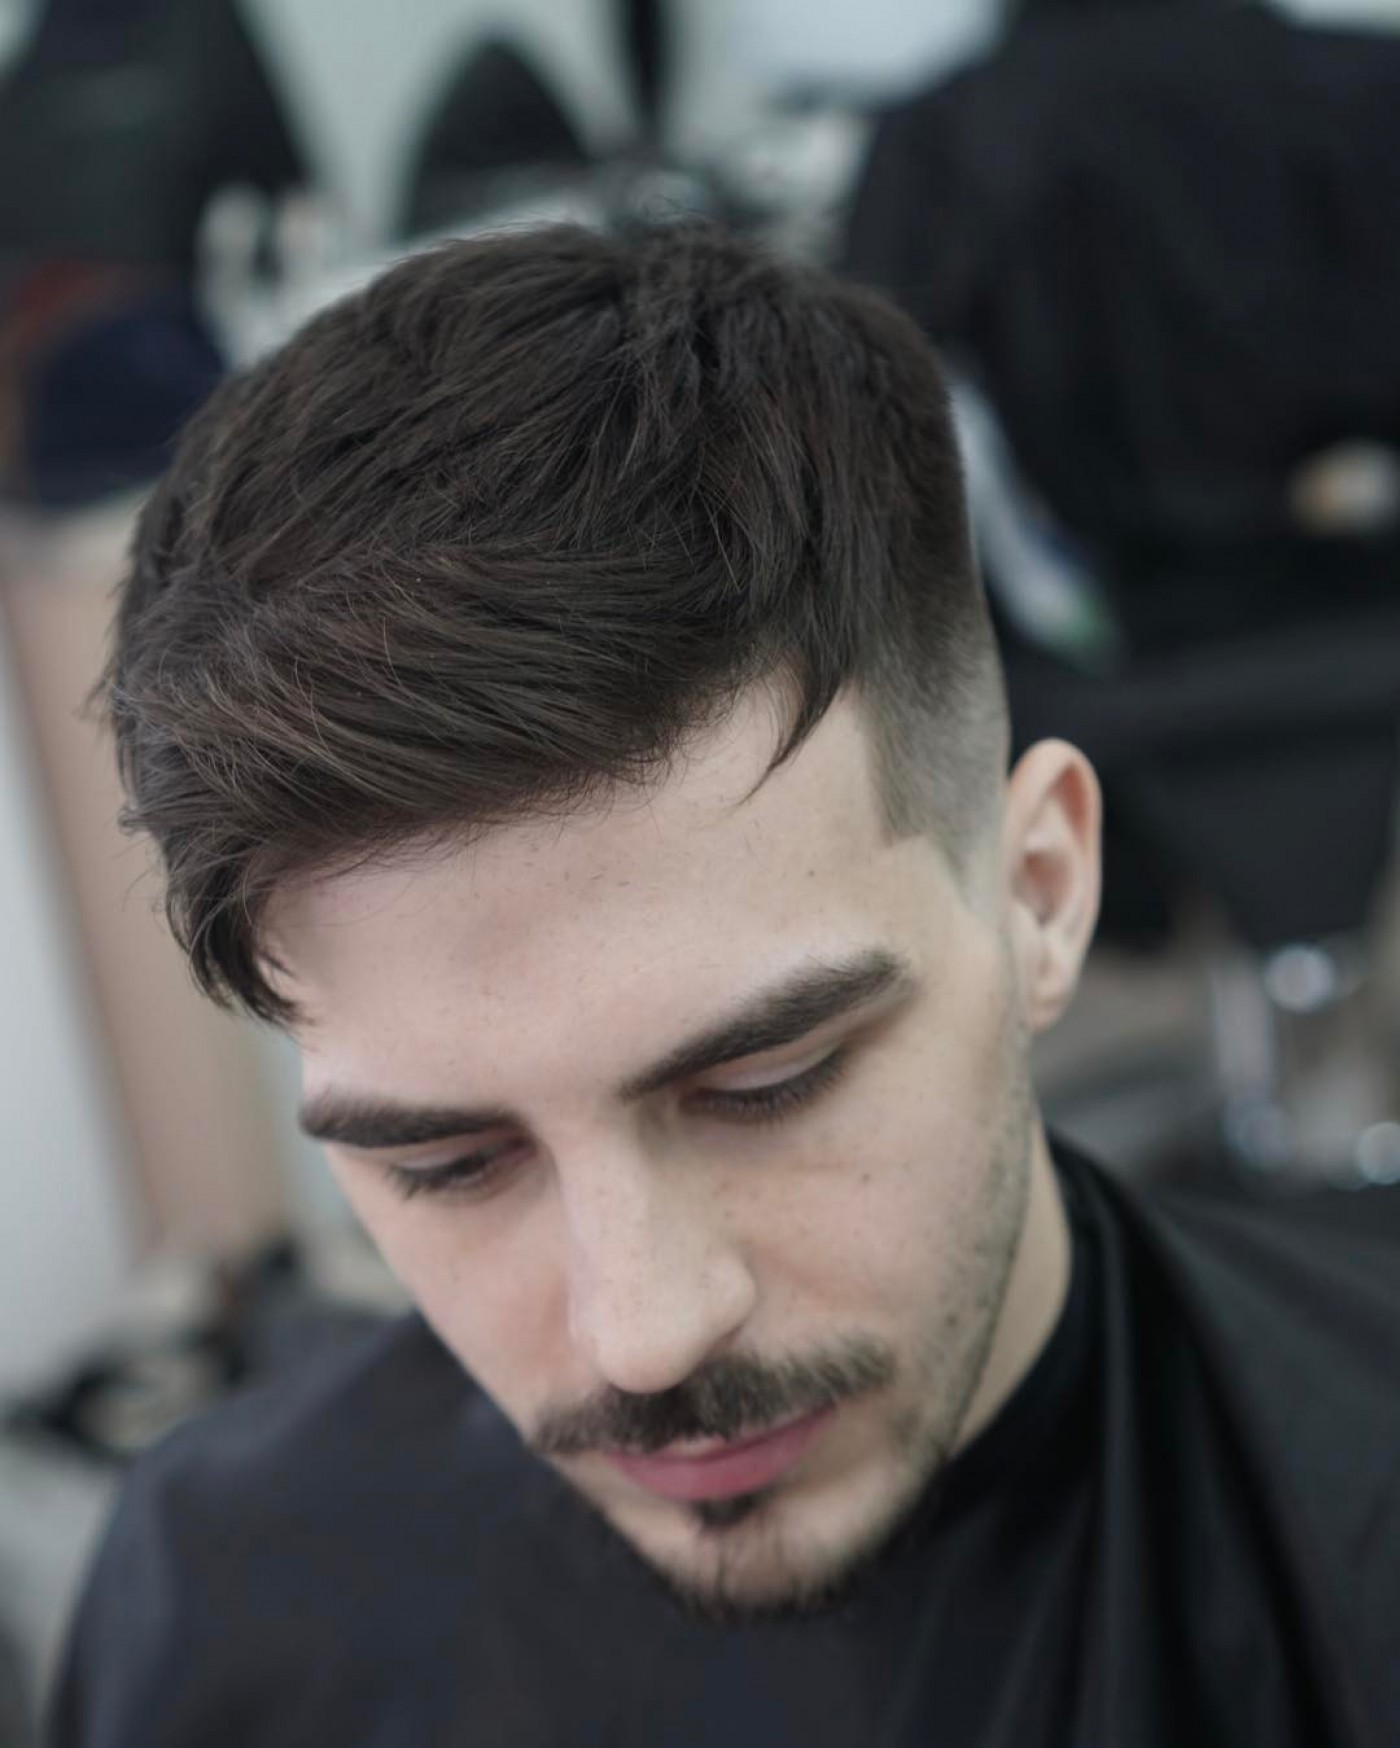 Best Stylish Haircut Ideas For Men 2019 42